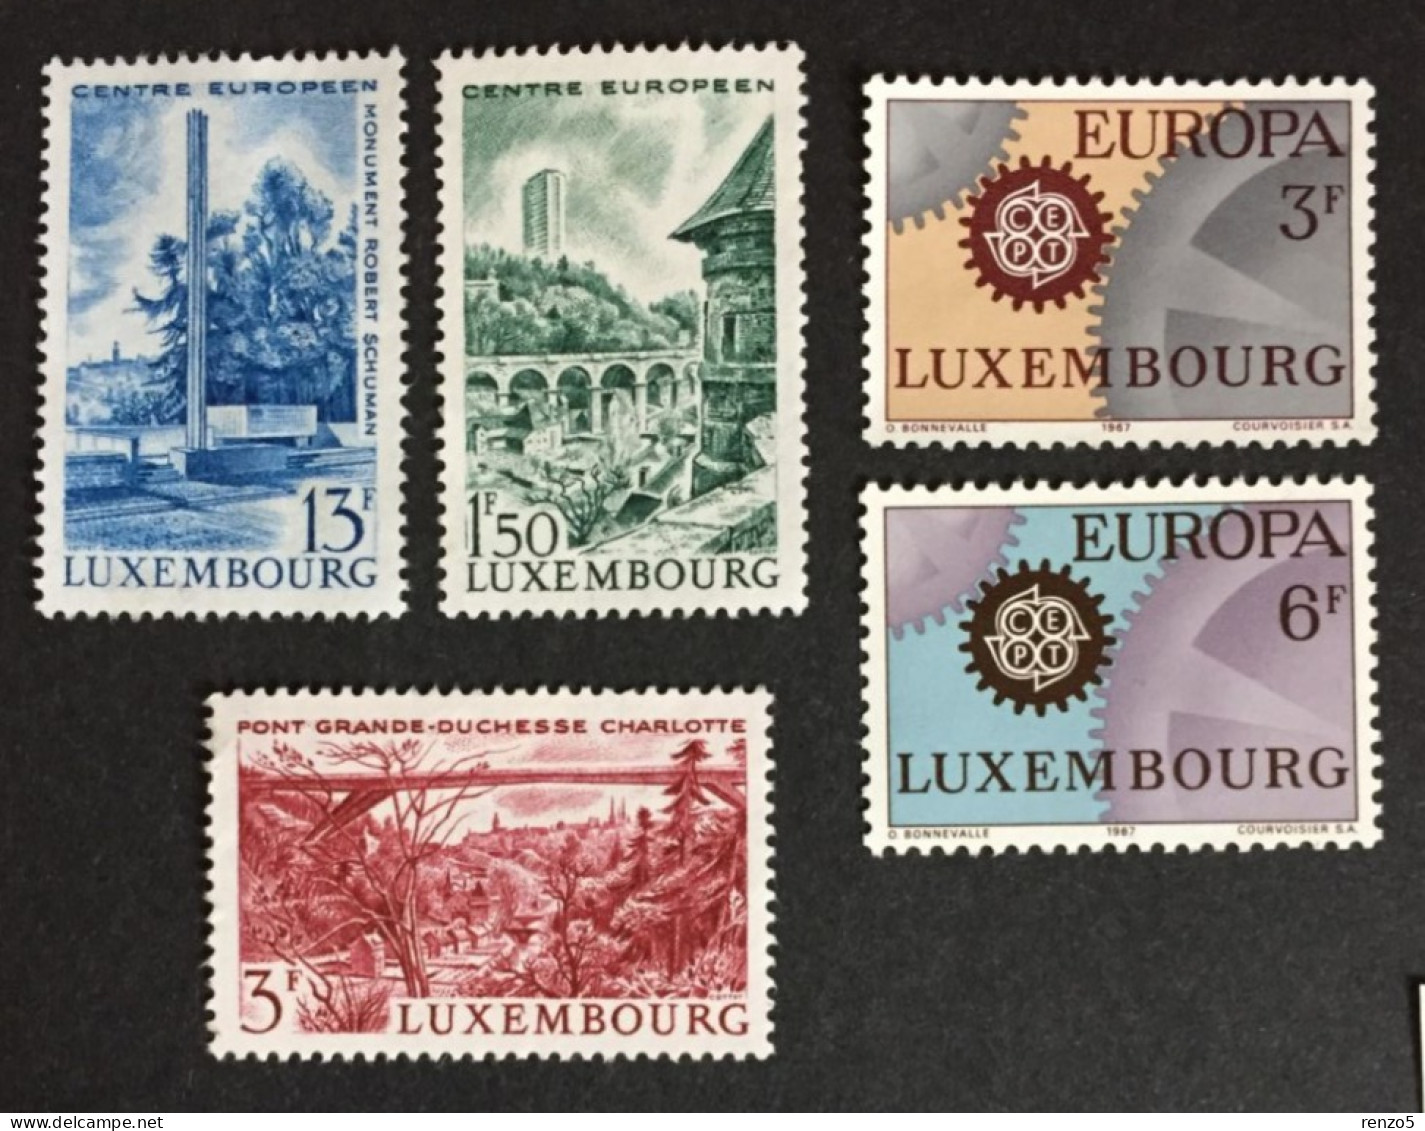 1966 Luxembourg - Tourism Landmarks, Europa CEPT, Lux European Center - Unused ( No Gum ) - Nuovi